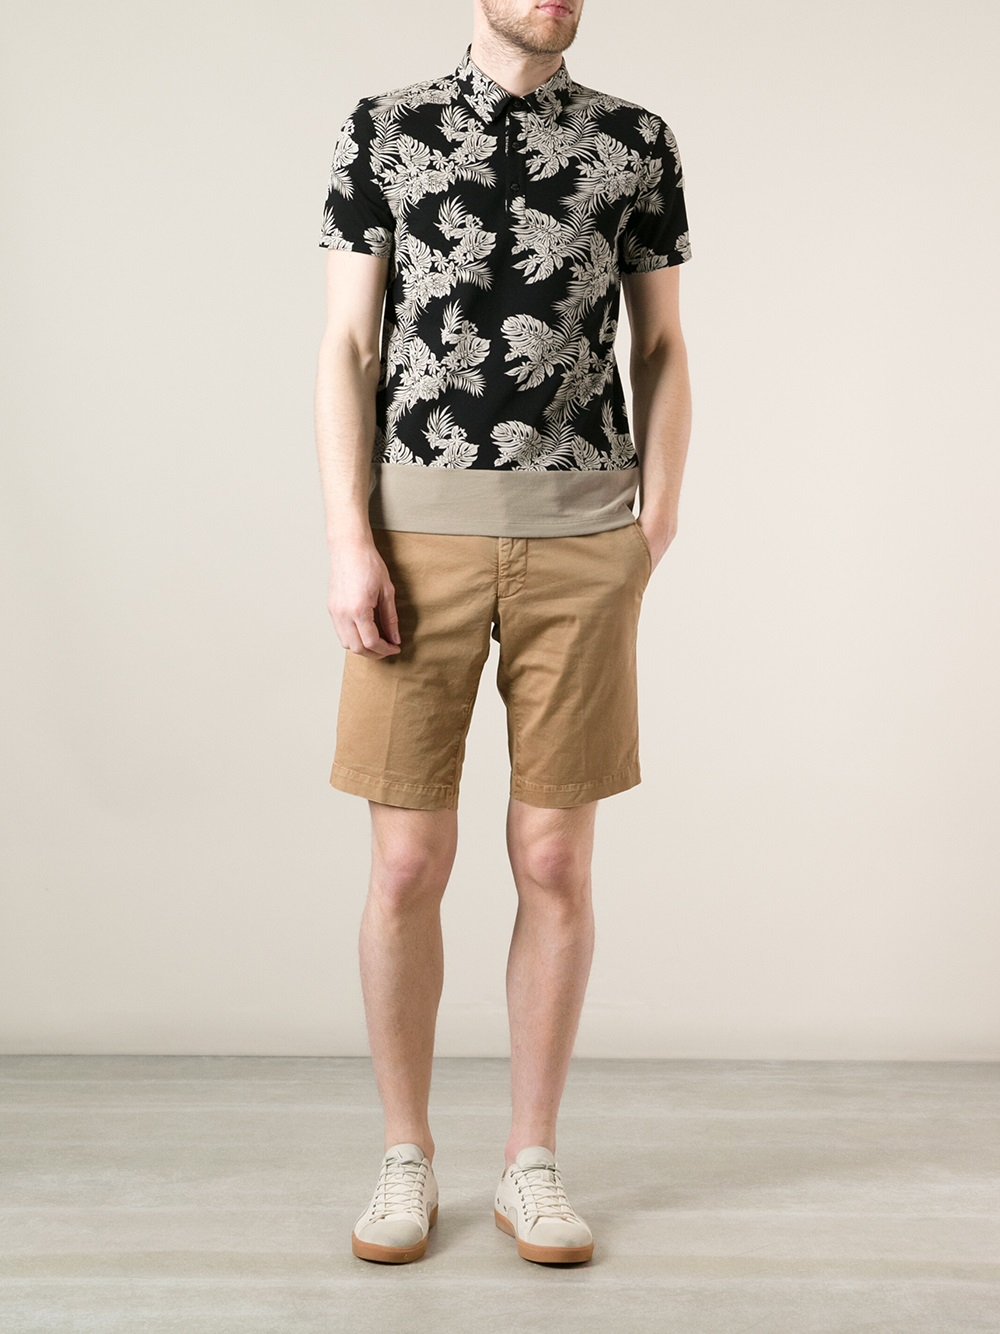 polo floral shorts